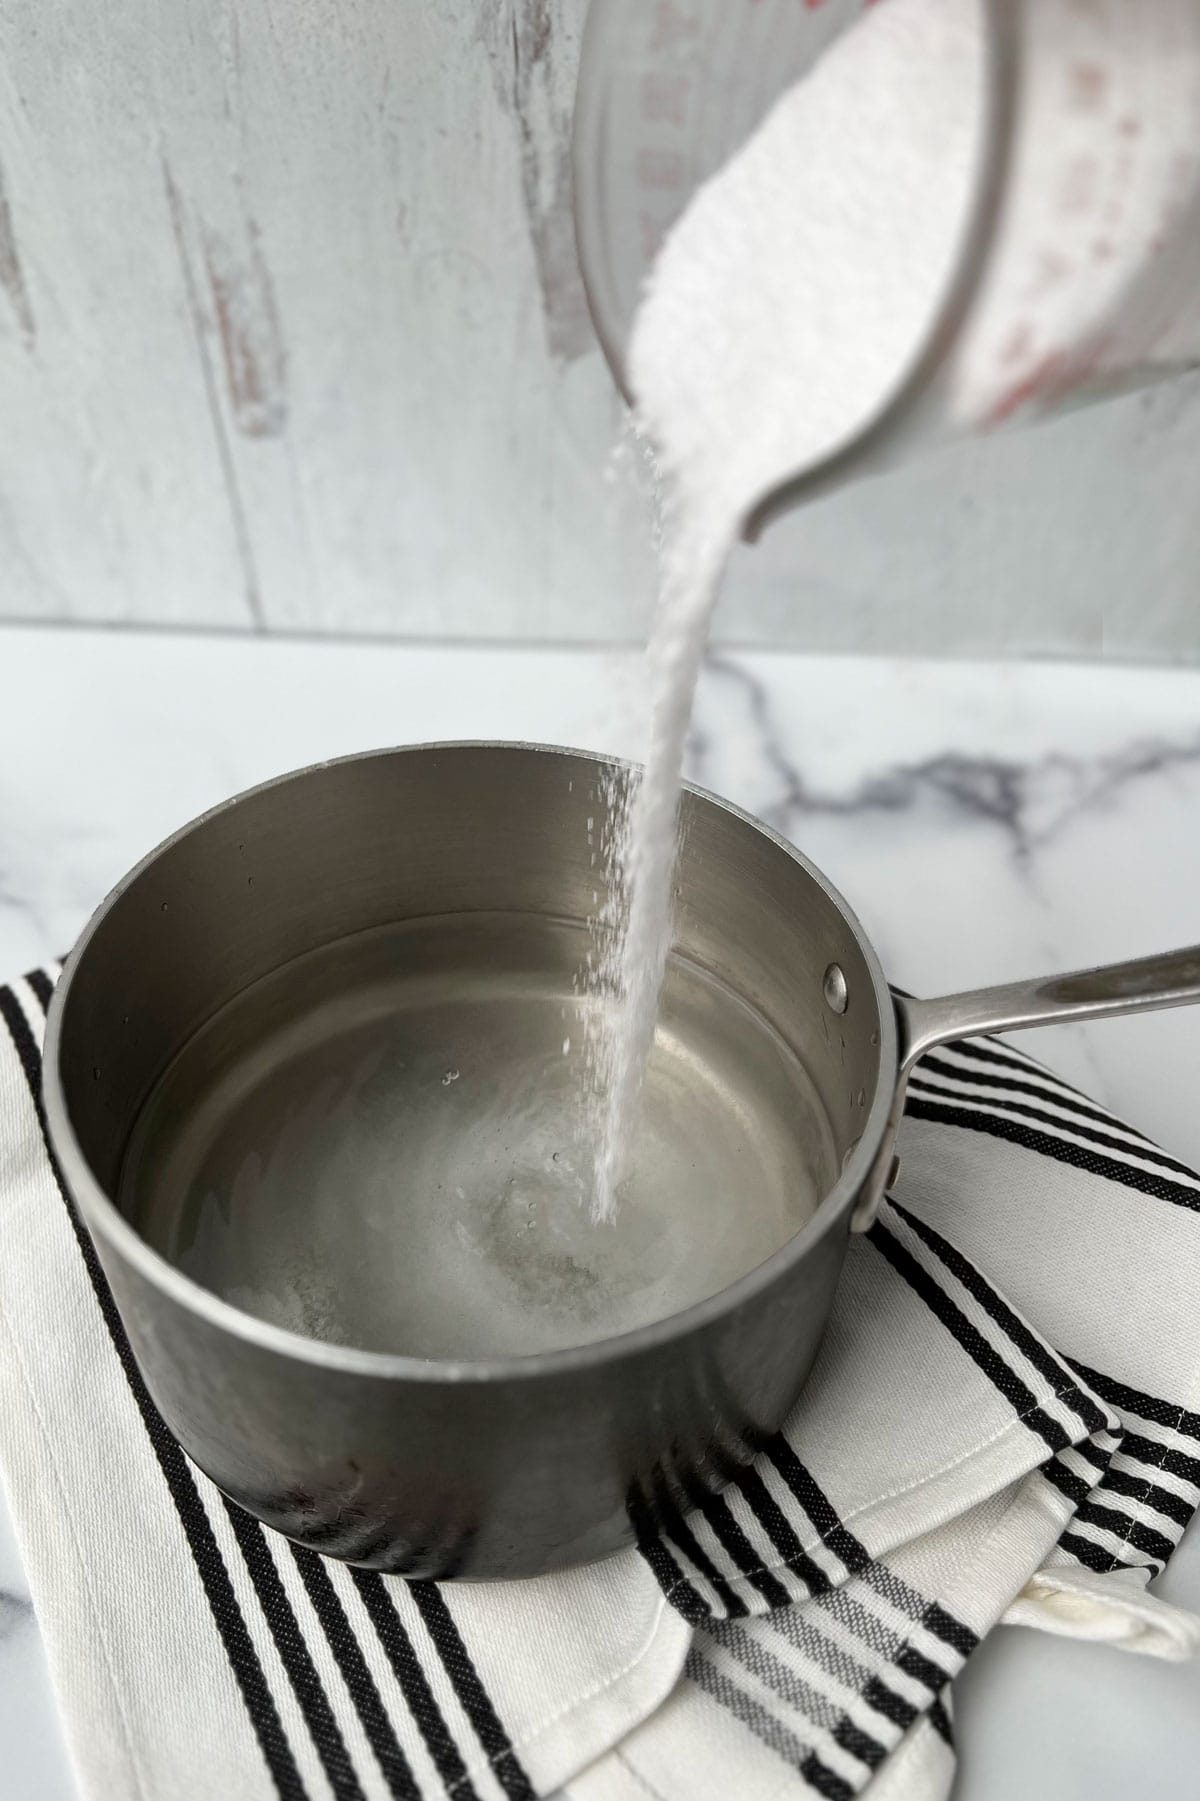 salt being poured into a sauce pan